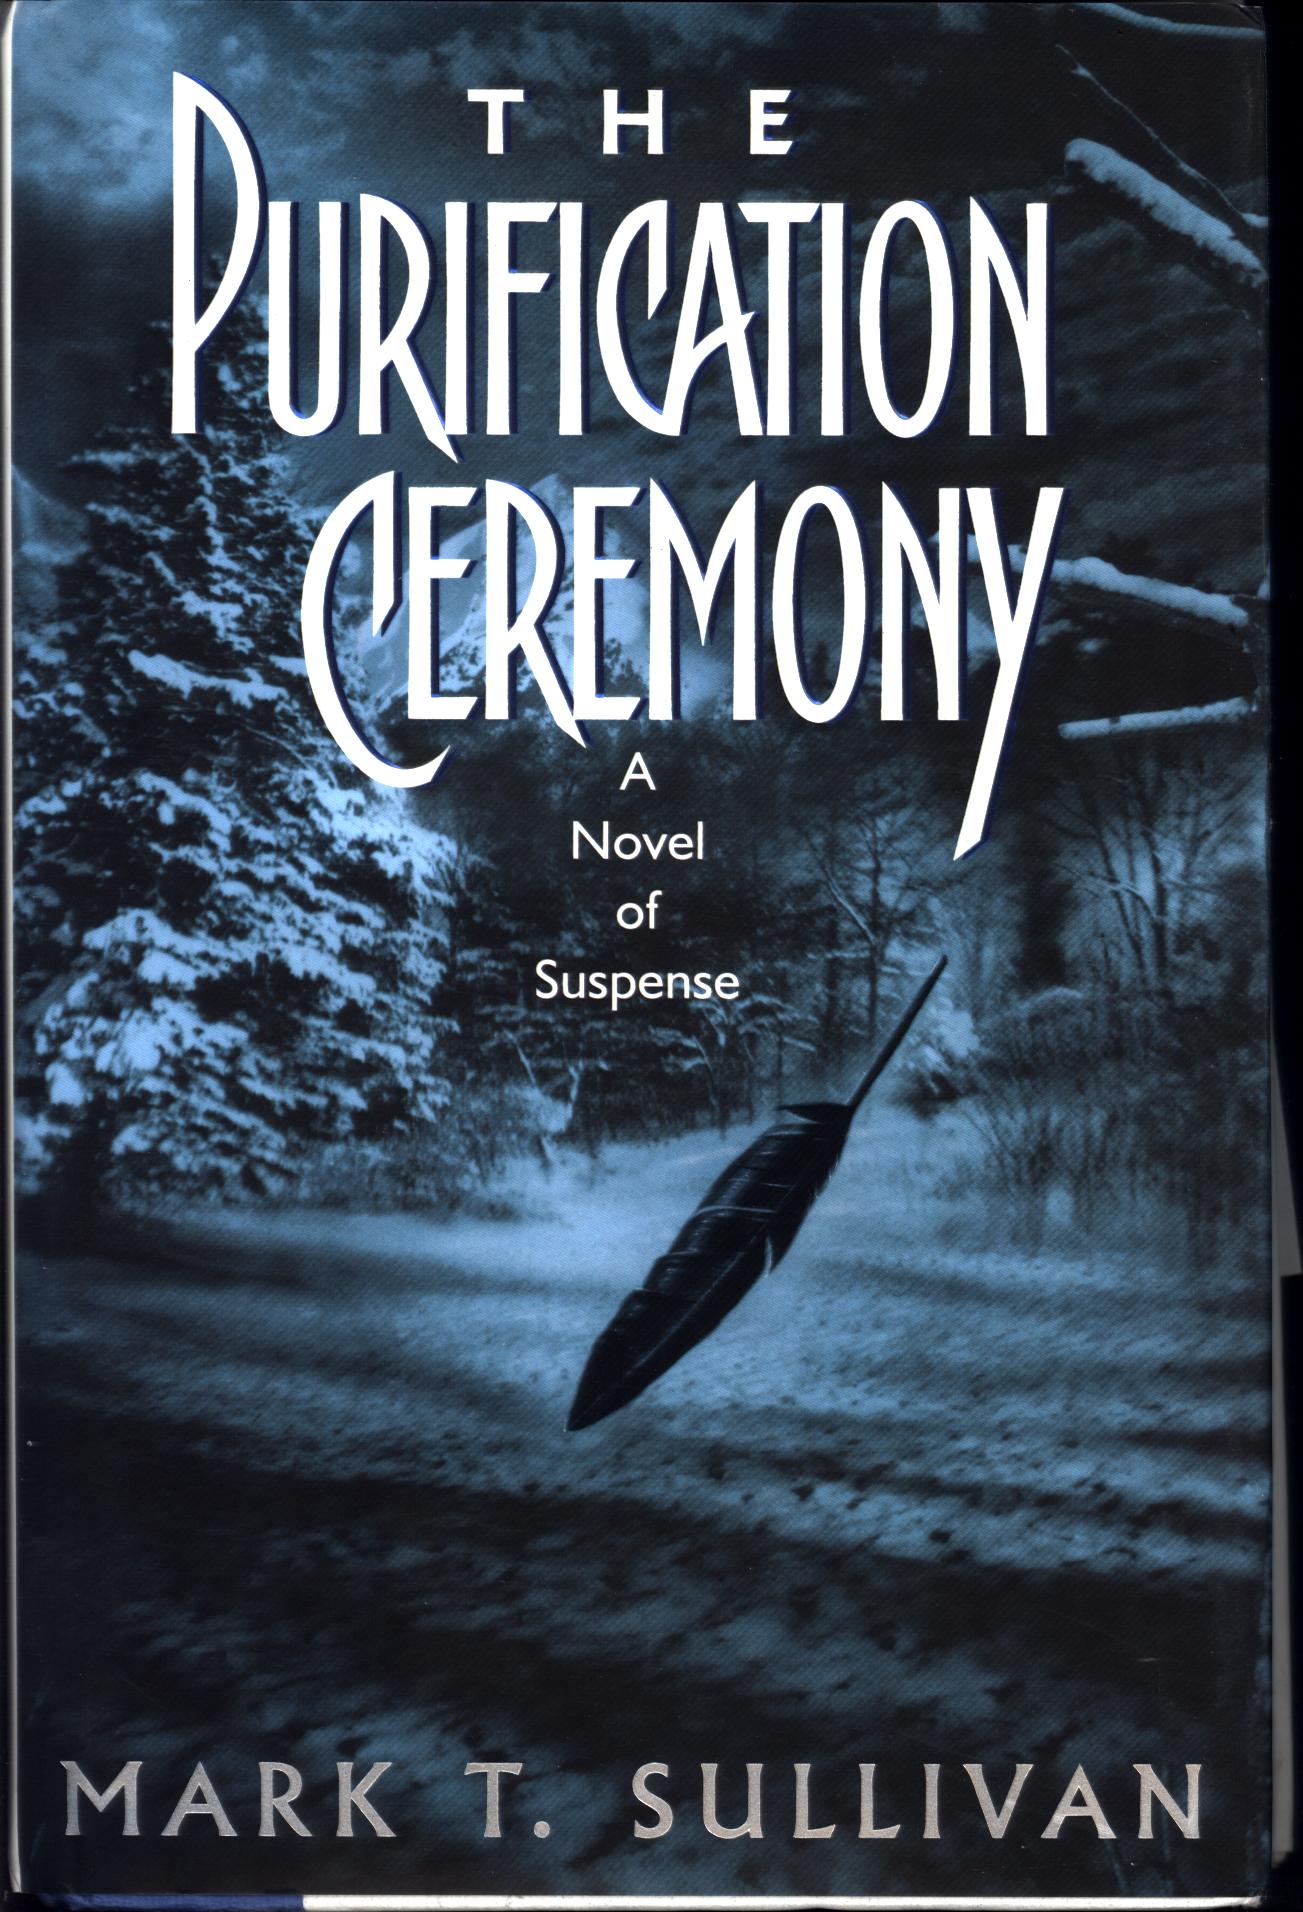 THE PURIFICATION CEREMONY: a novel of suspense. 